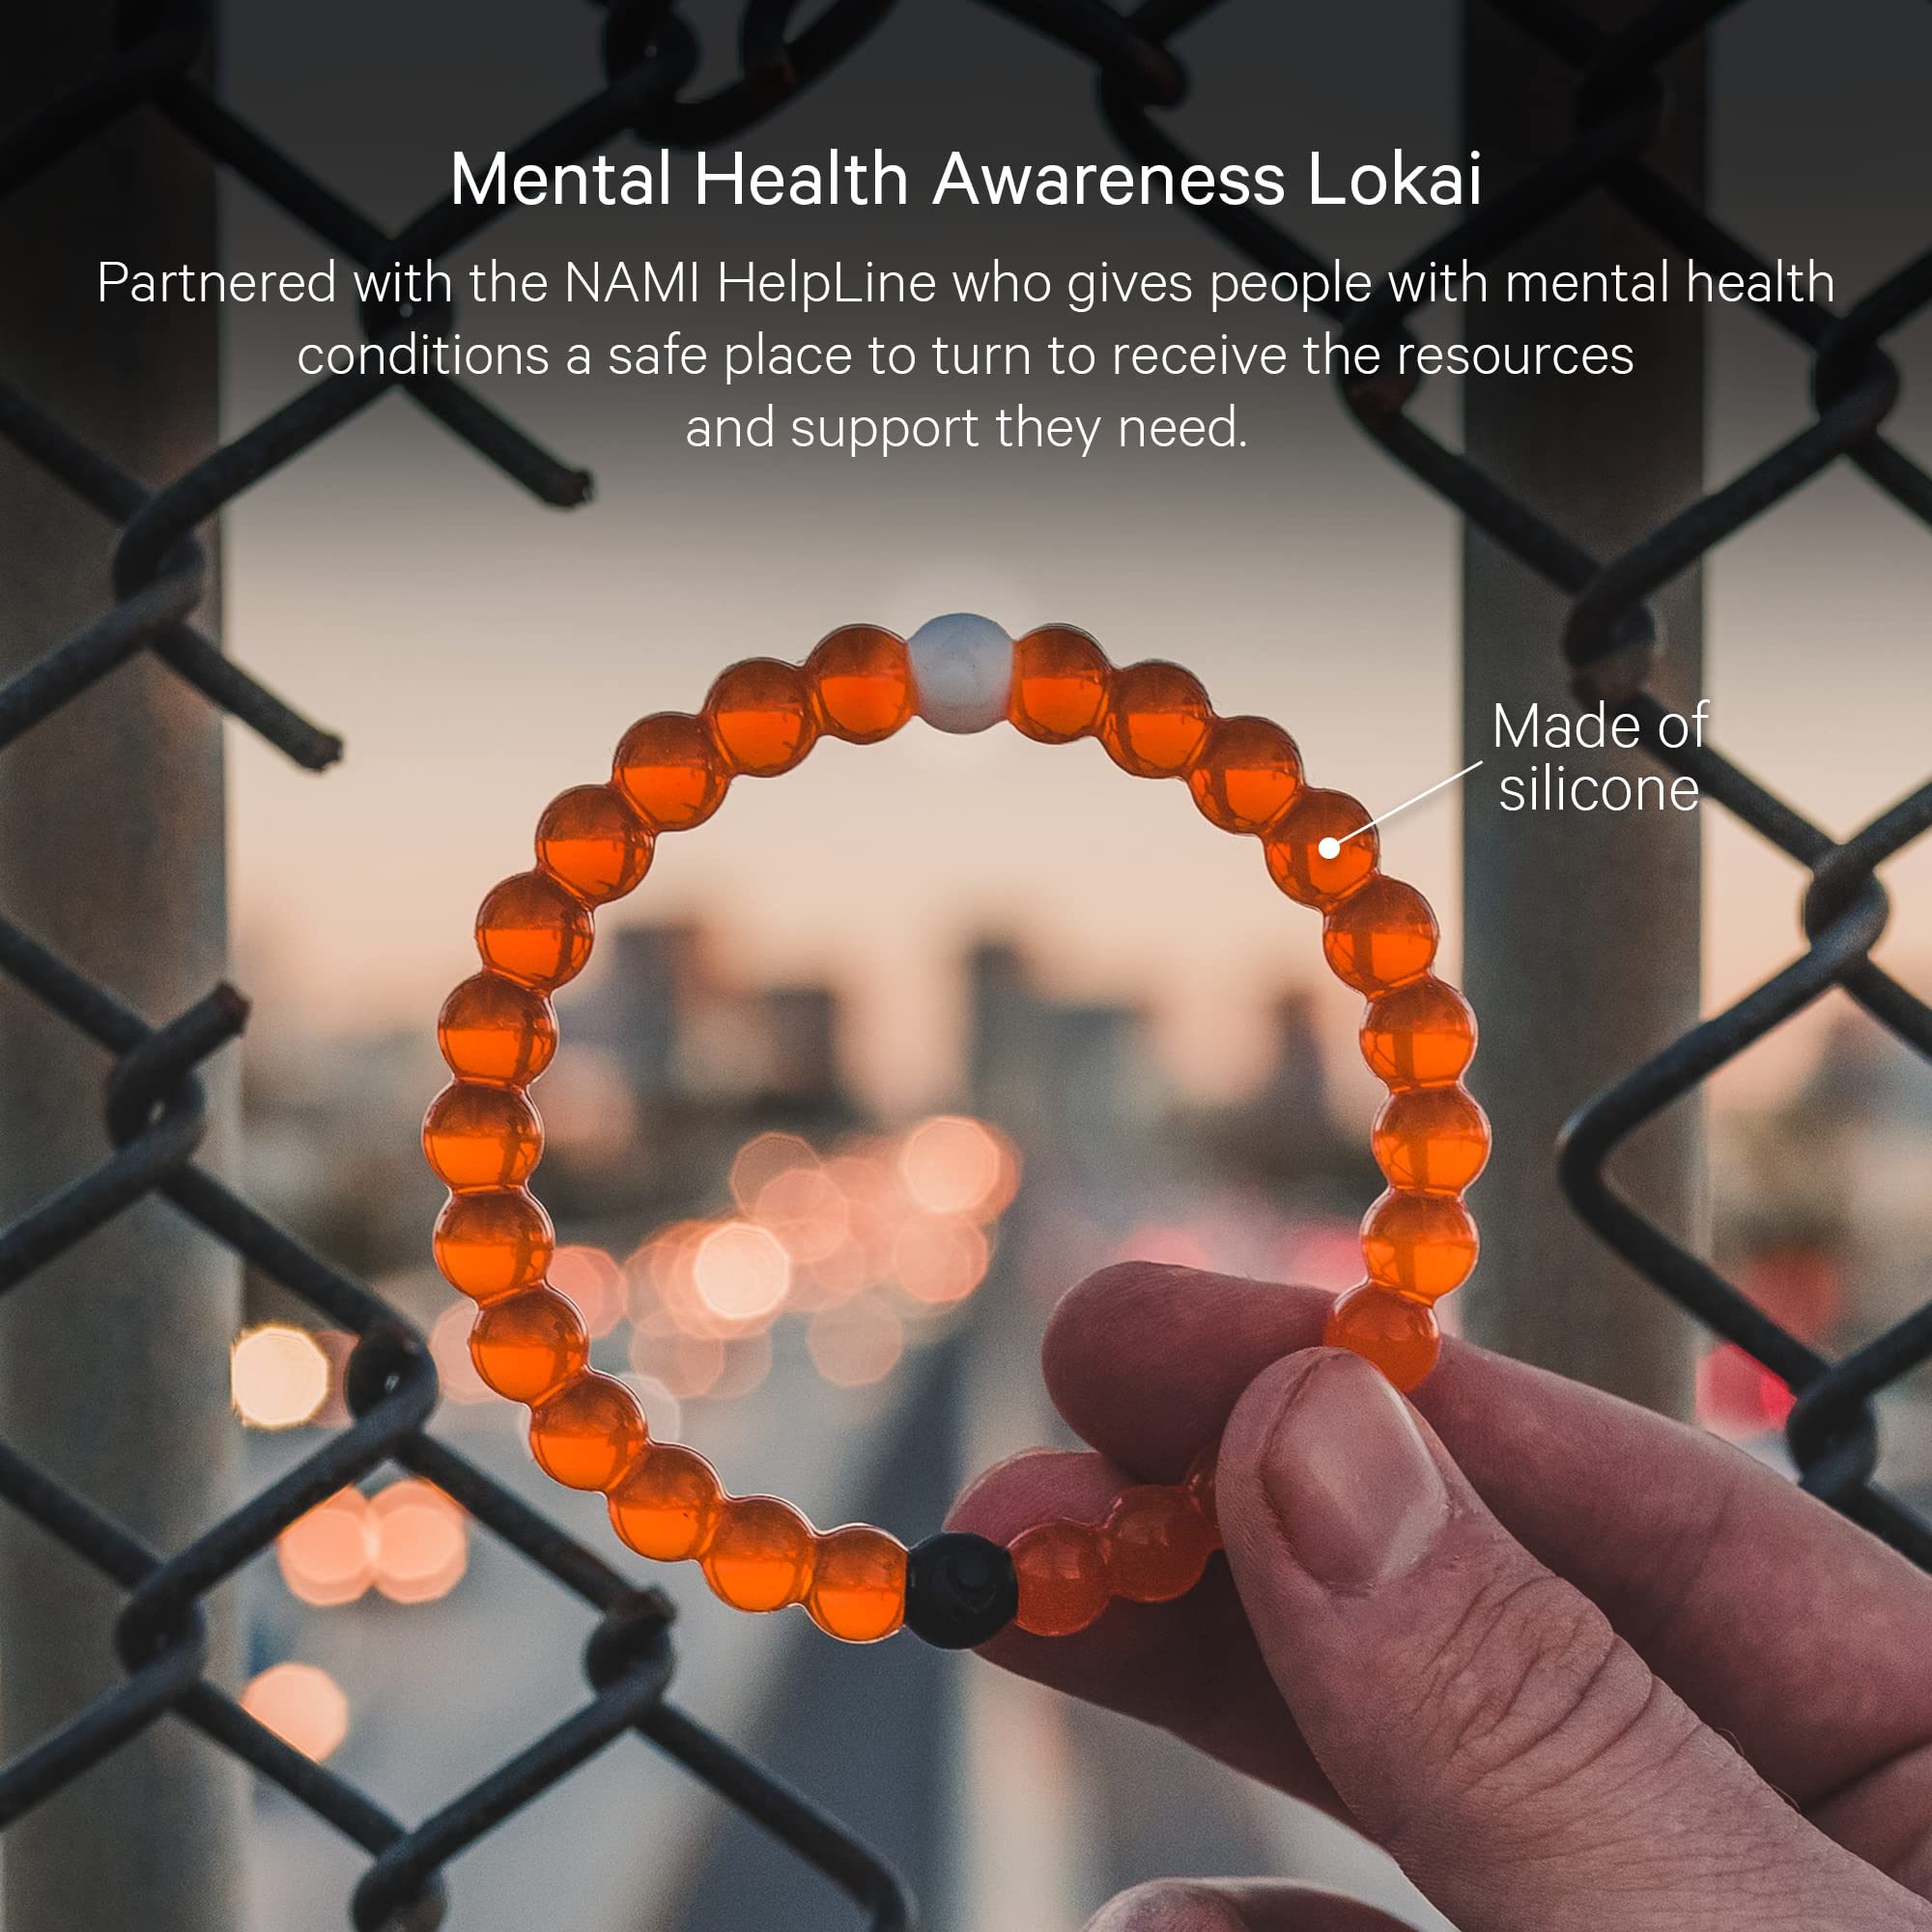 Lokai Silicone Beaded Bracelet for Mental Health Awareness - Silicone Jewelry Fashion Bracelet Slides-On for Comfortable Fit - Mental Health Bracelet for Men, Women & Kids